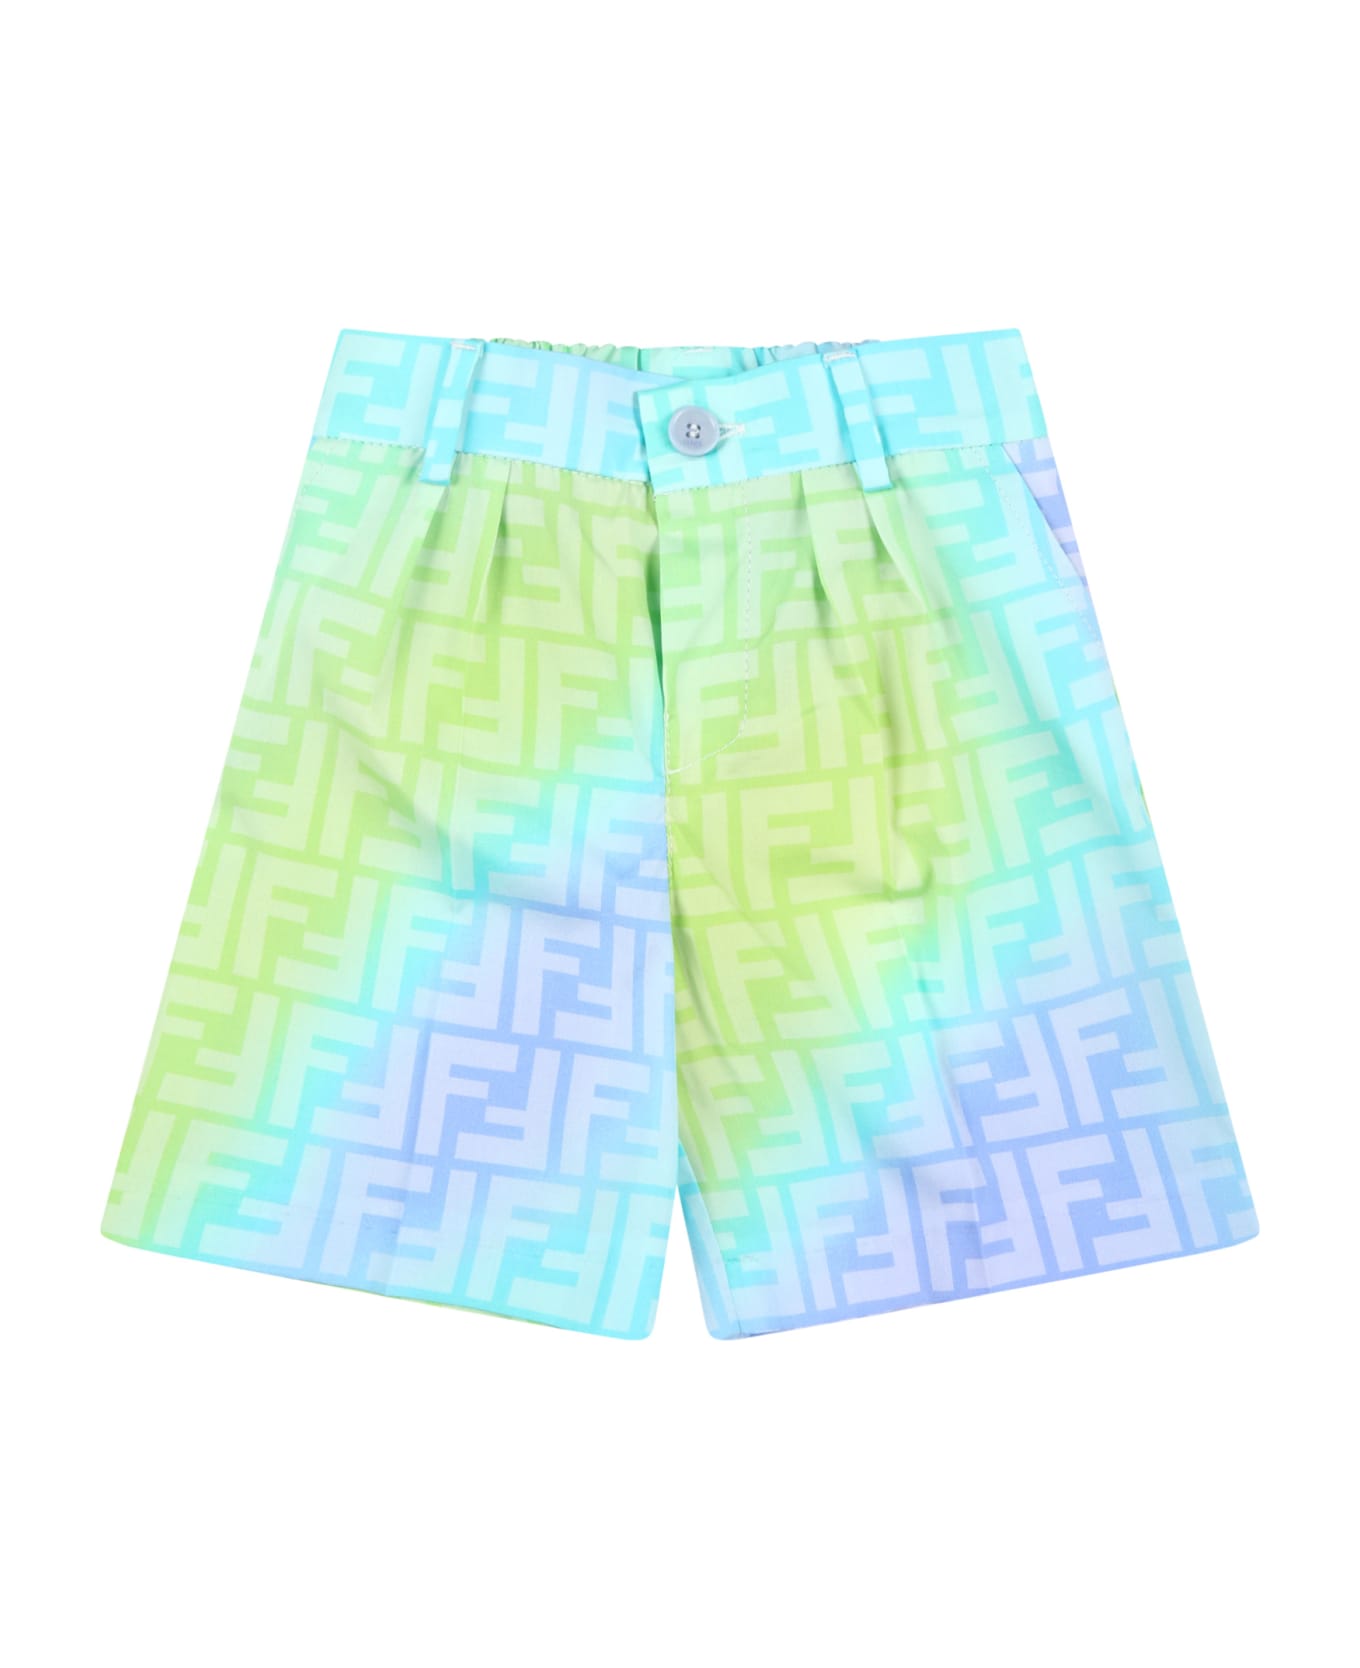 Fendi Multicolor Shorts For Baby Boy With Ff - Multicolor